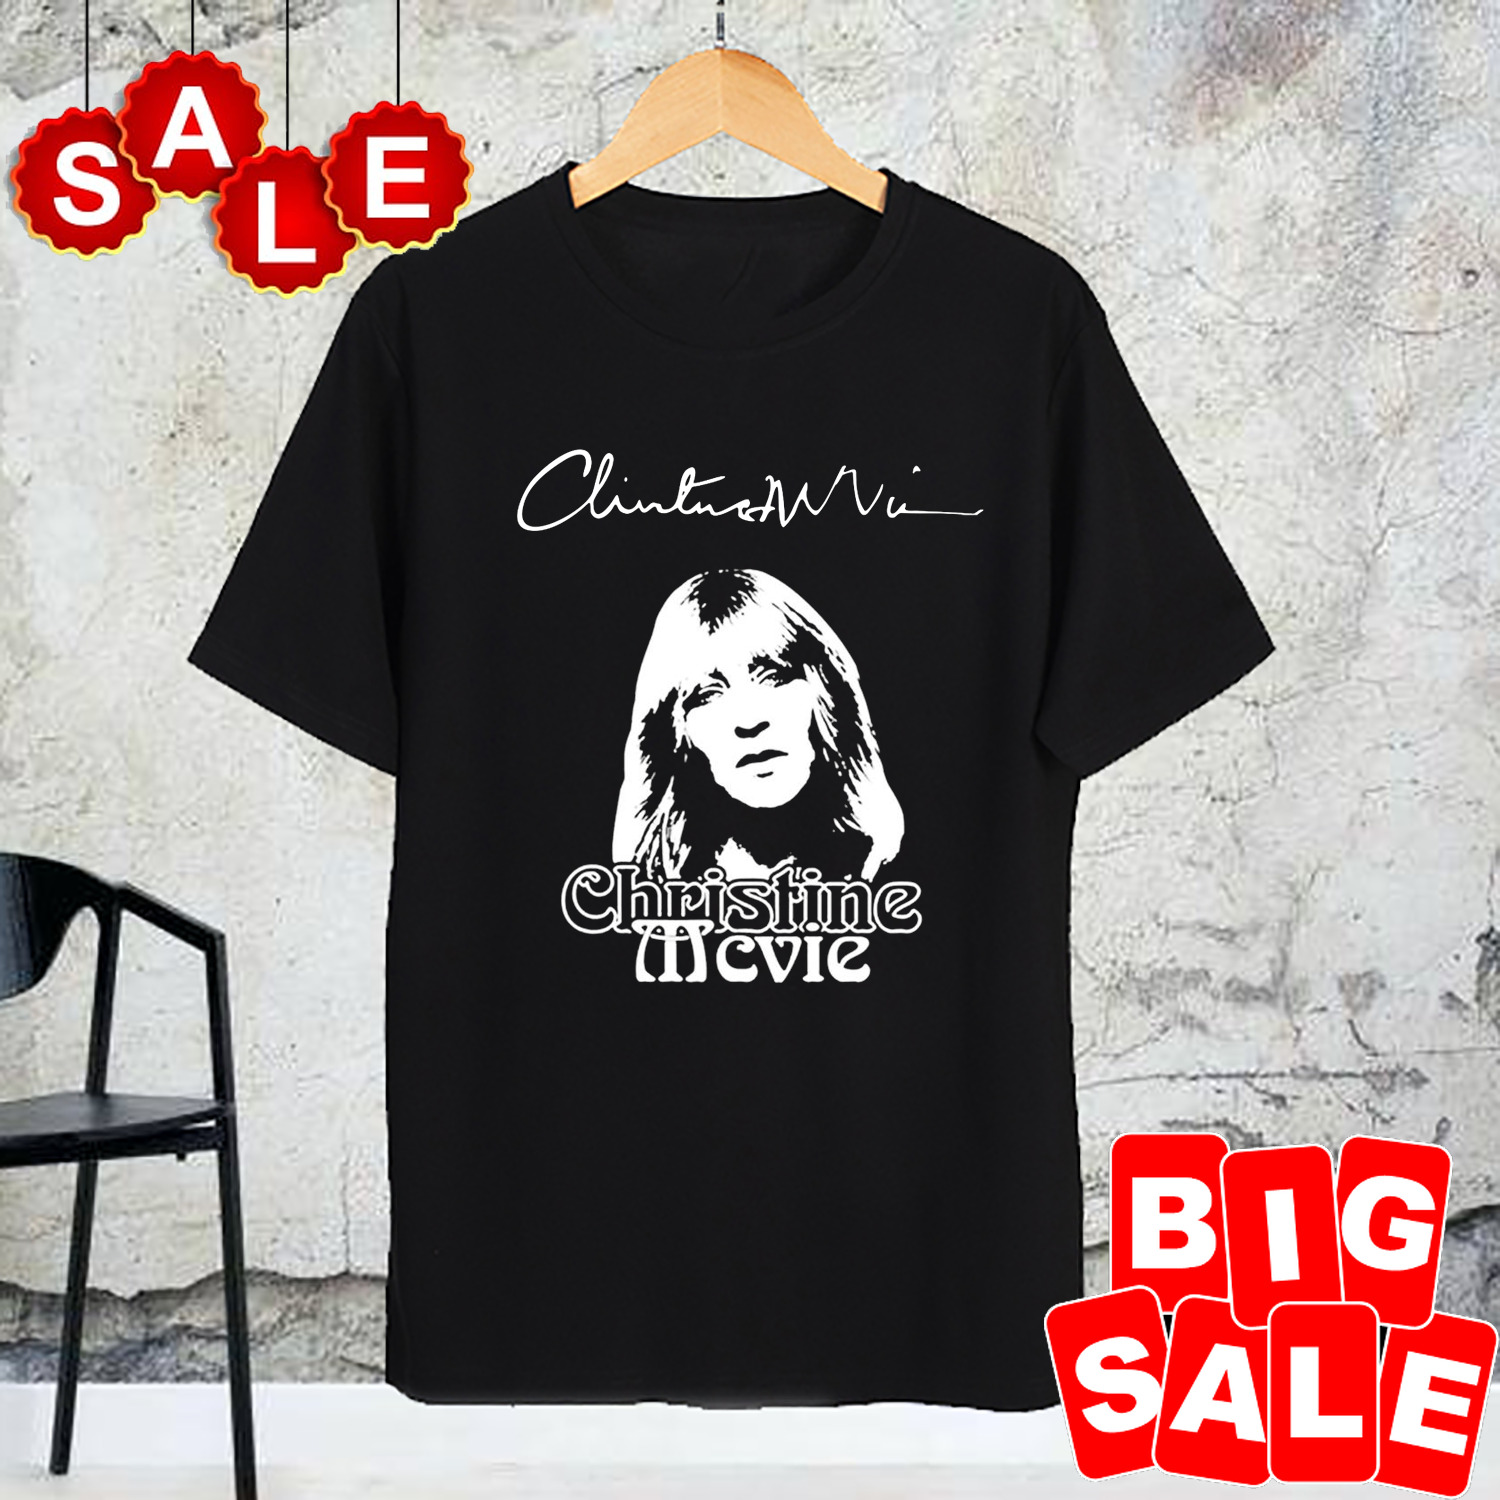 Christine McVie Signature Short Sleeve Cotton Black All Size Shirt VC059